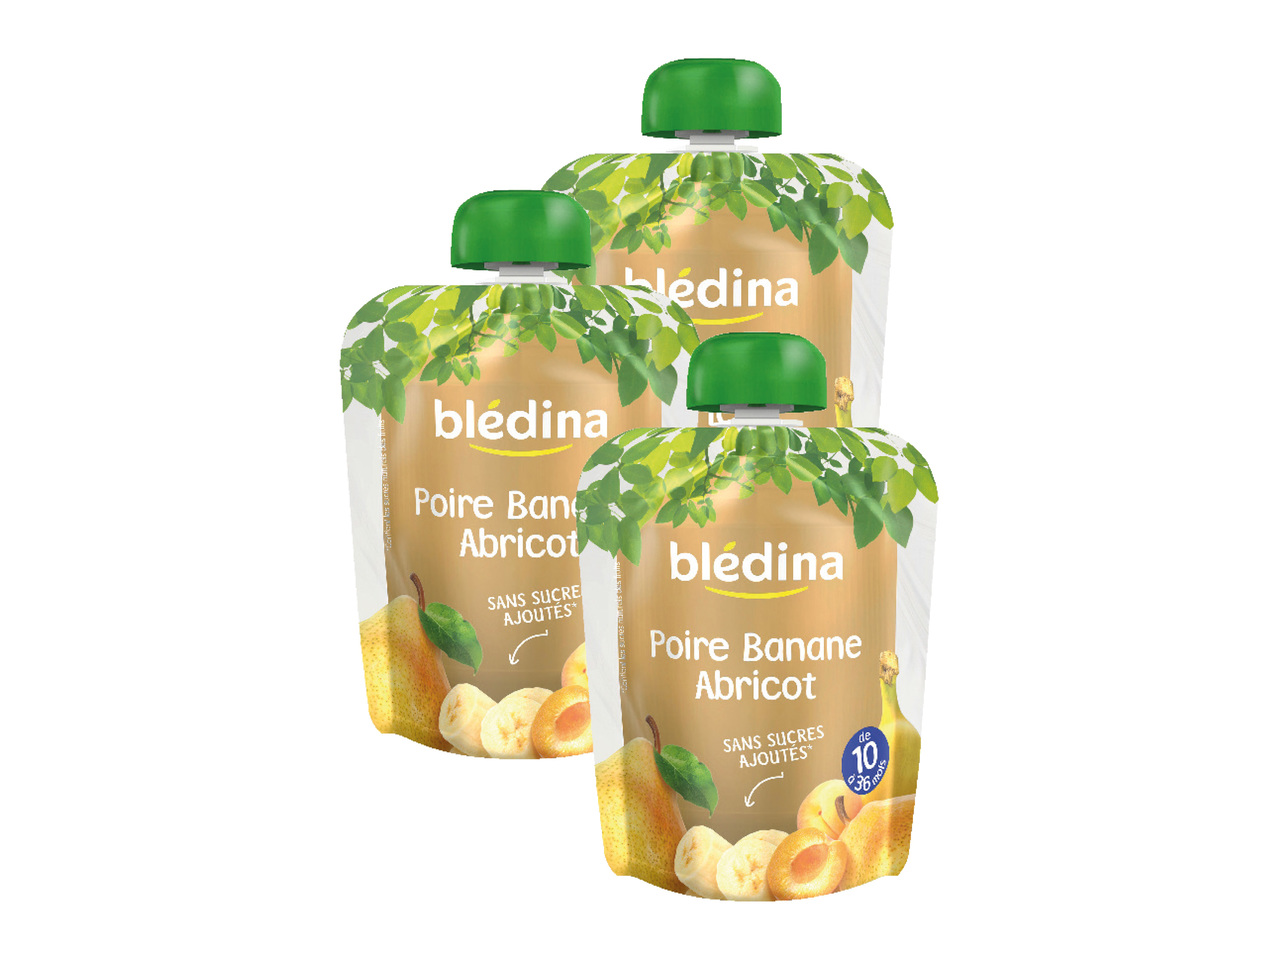 Blédina gourde poire banane abricot1